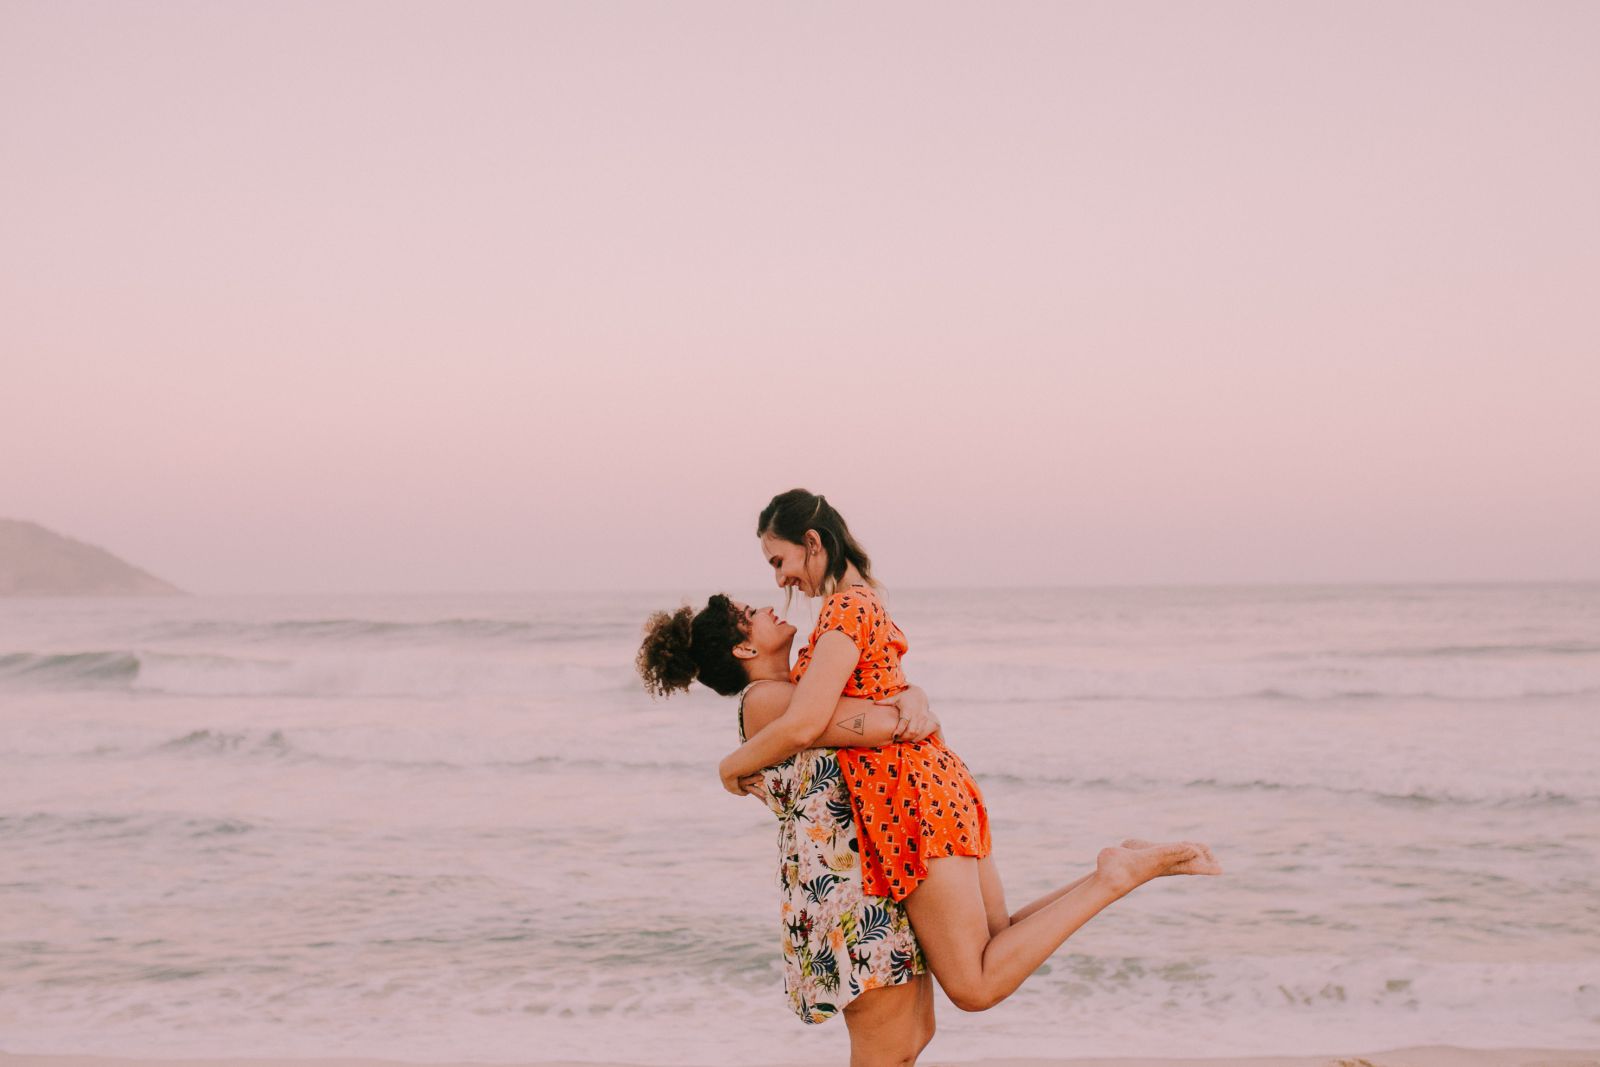 Casal de mulheres na praia se abraçando